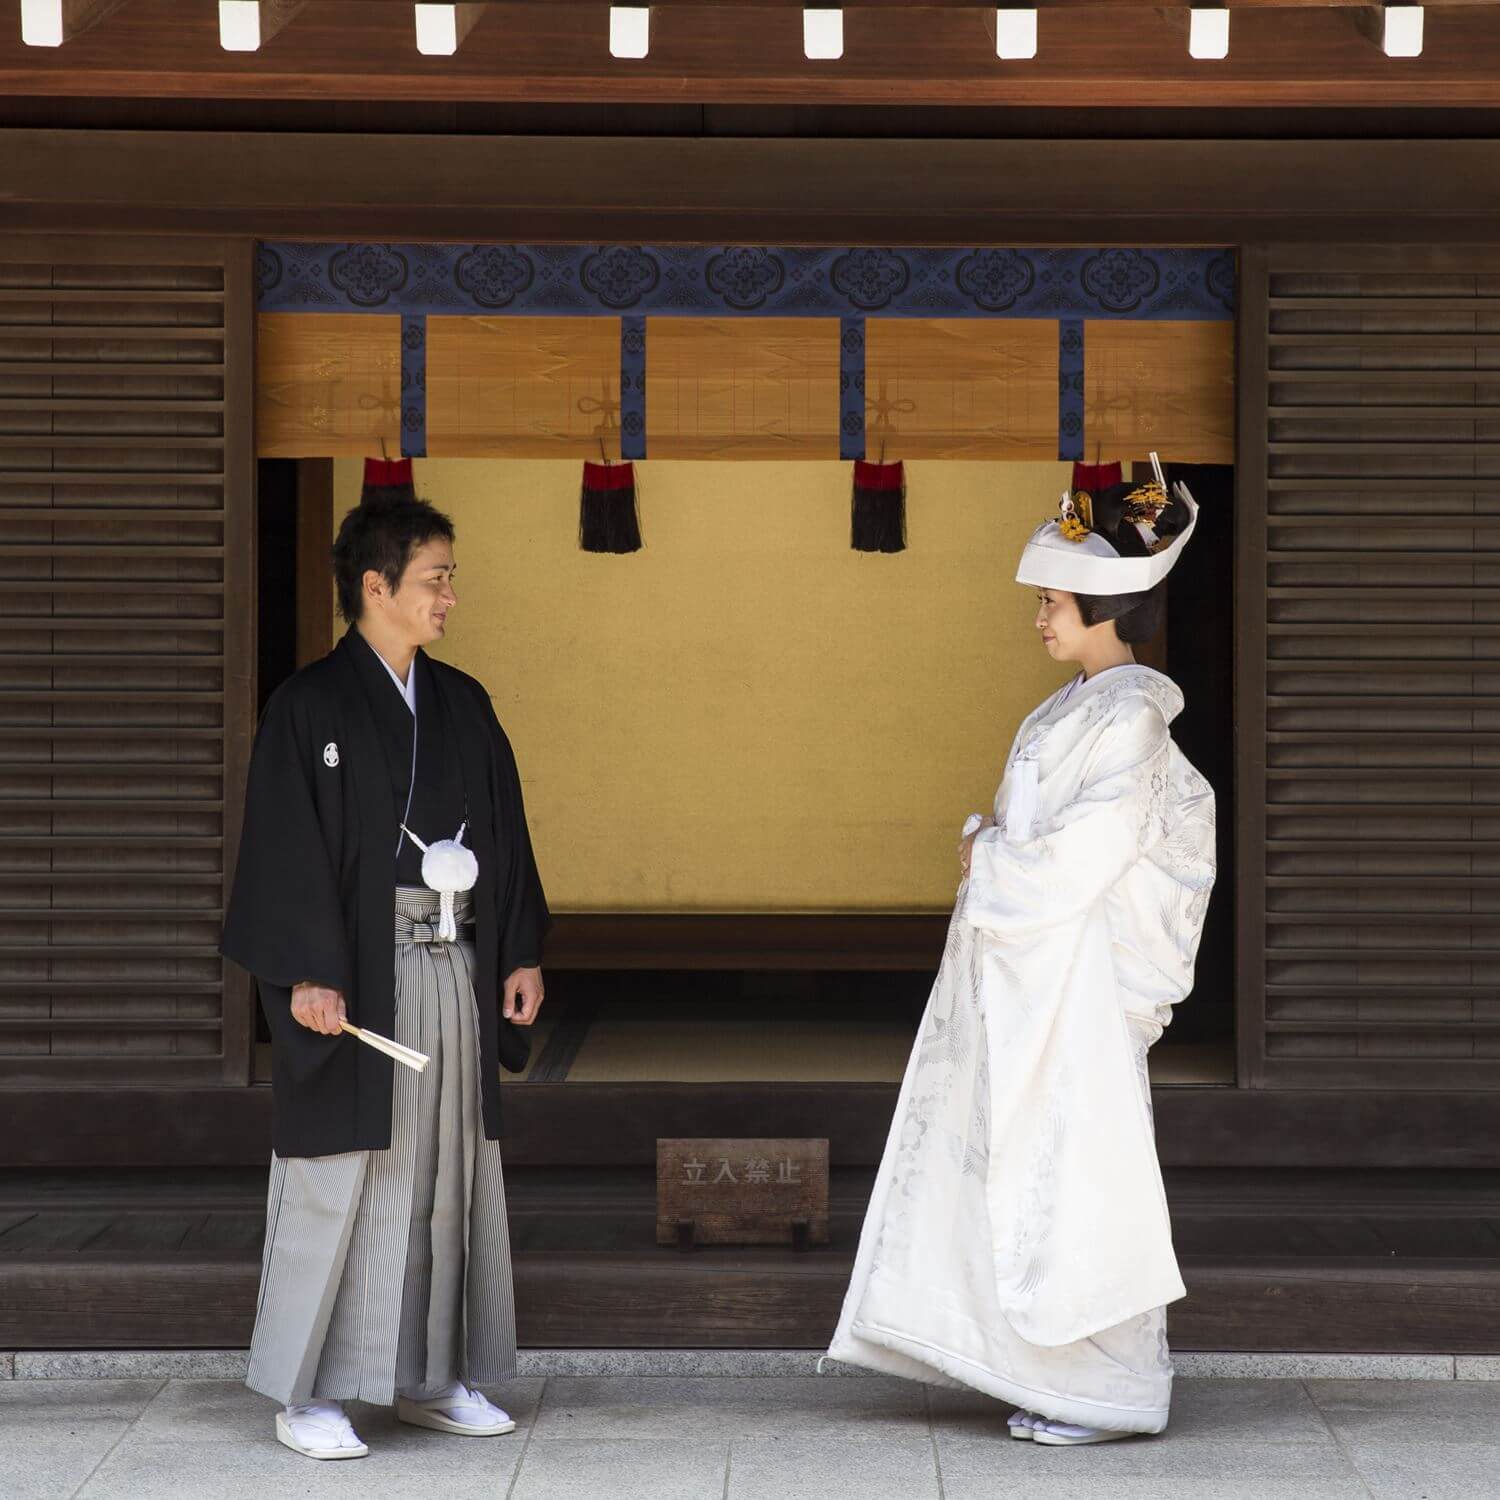 Celebration of a typical wedding ceremony in Meiji Jingu Shrine, Tokyo = Shutterstock